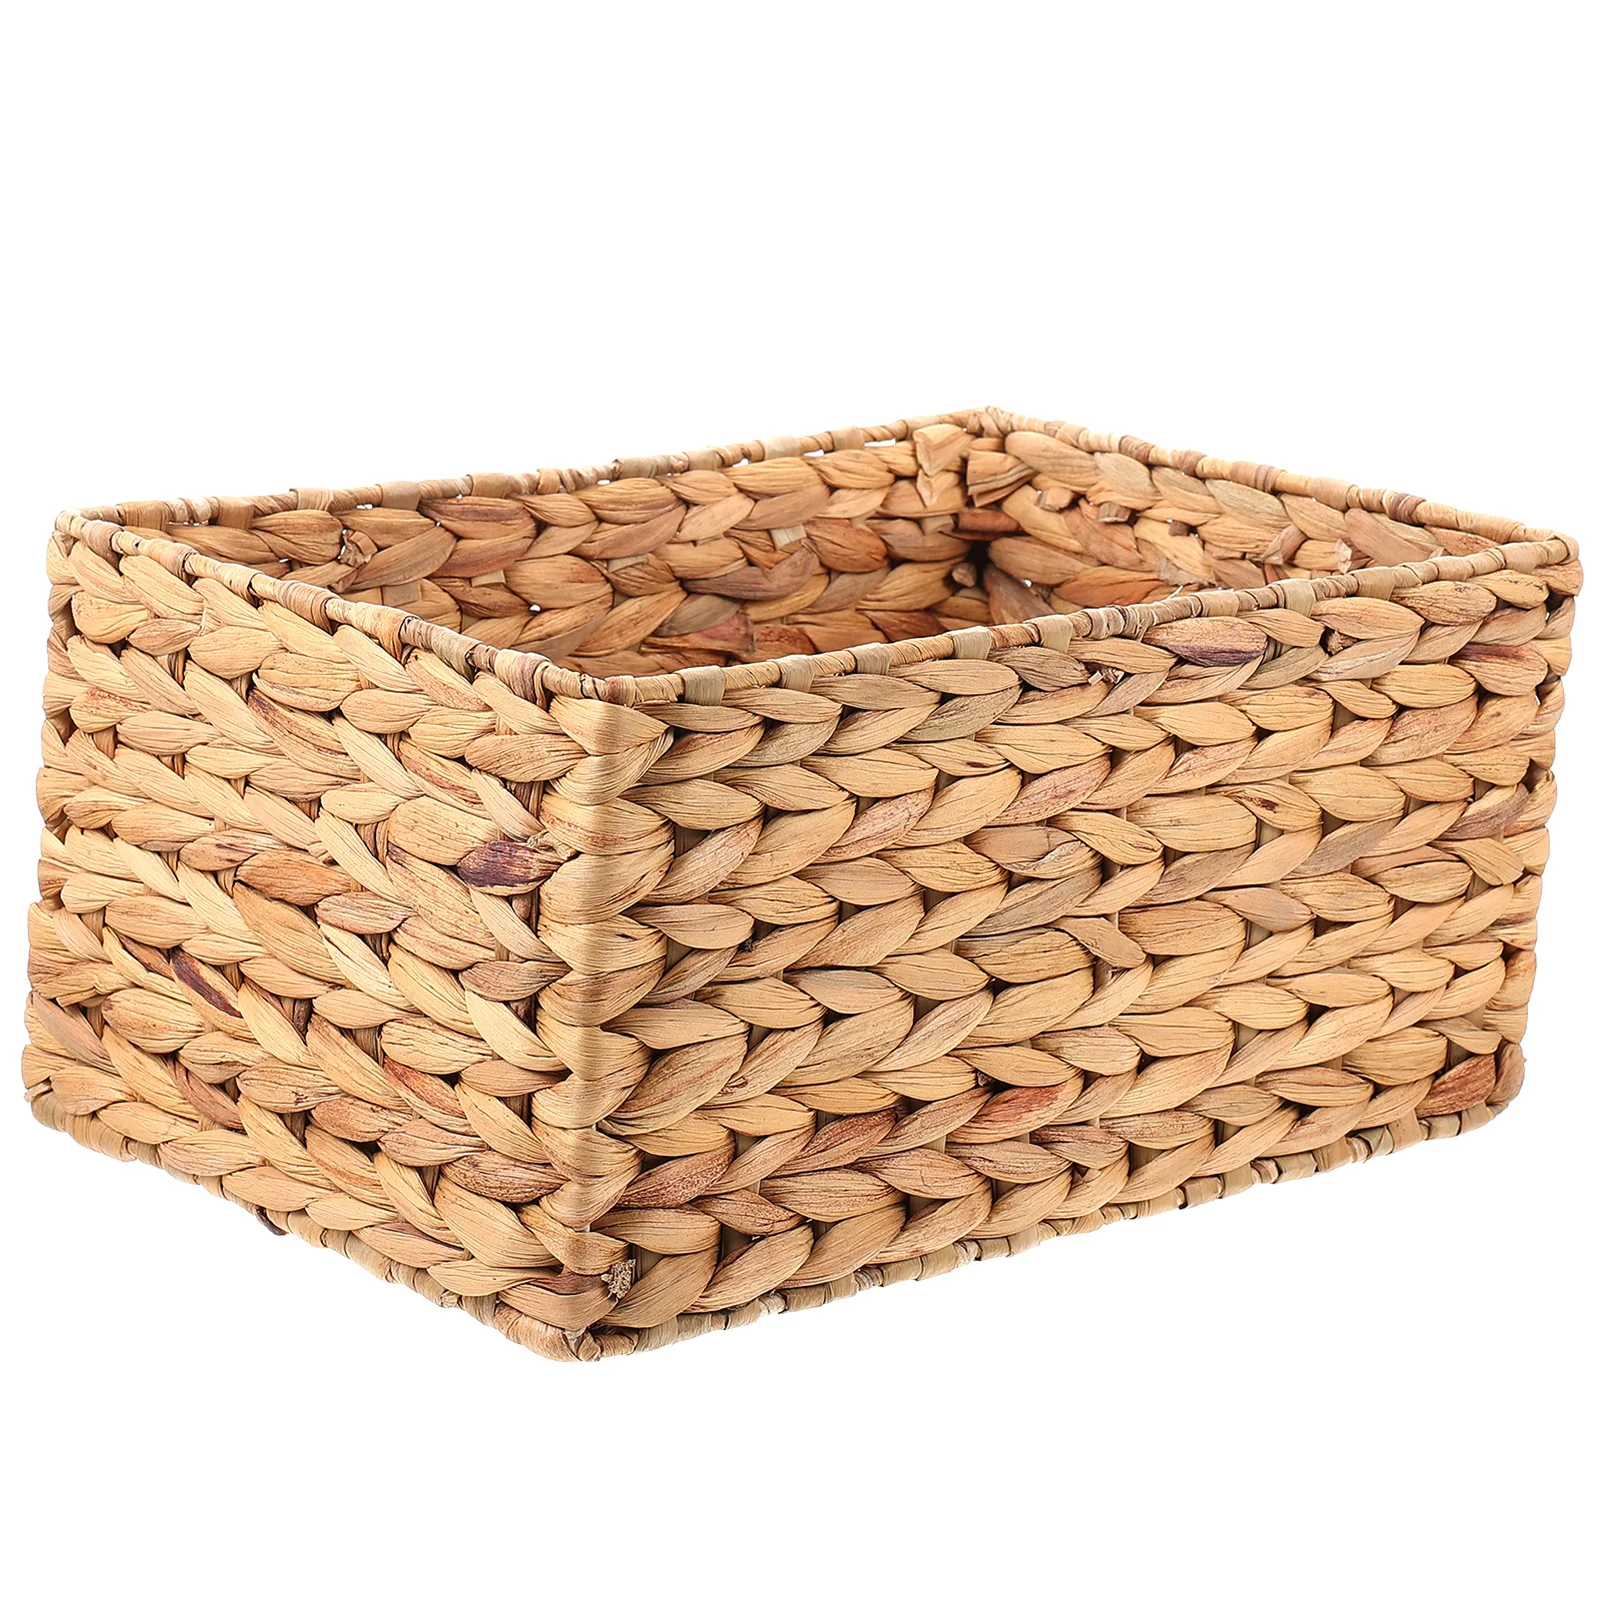 

Storage Basket Kid Snack Container Baskets Shelf Tray Water Hyacinth Grass Decorative Living Room Wicker Bins Child Organizing